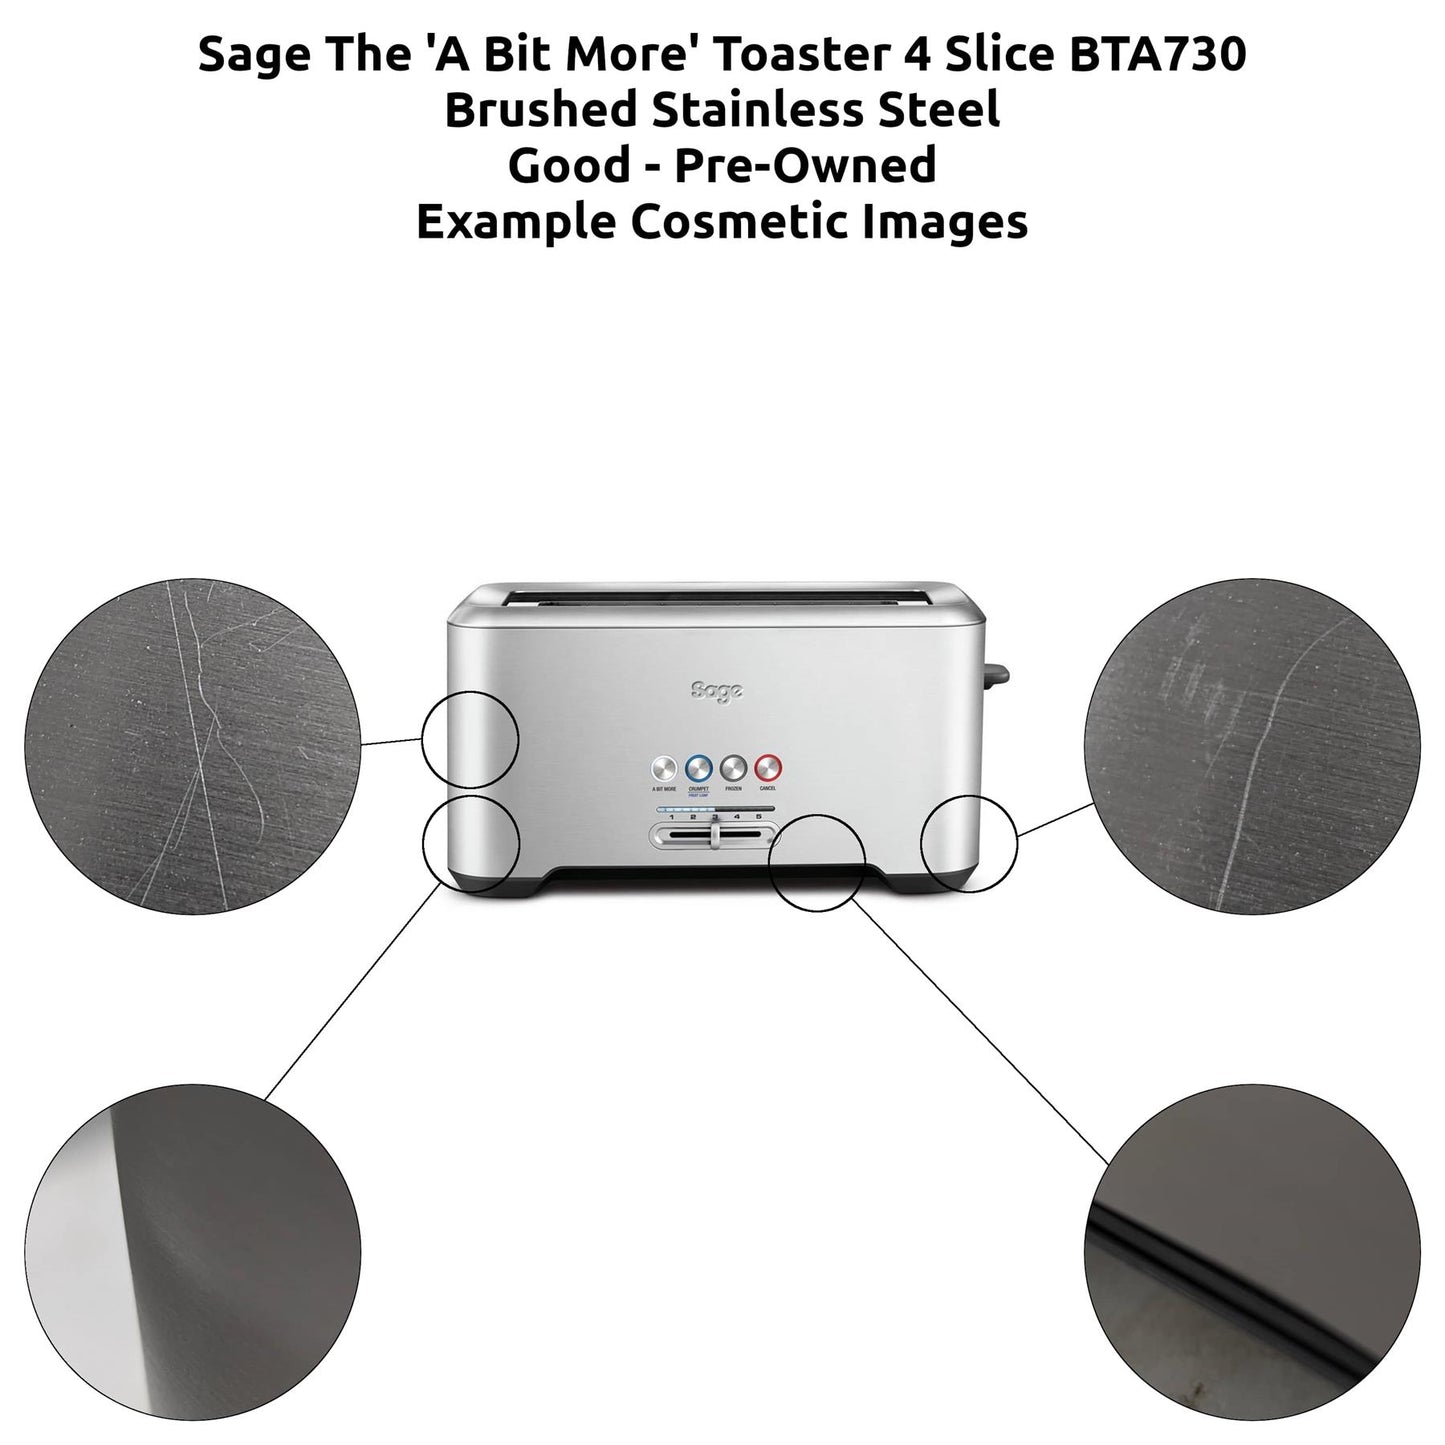 Sage The 'A Bit More' Toaster 4 Slice BTA730